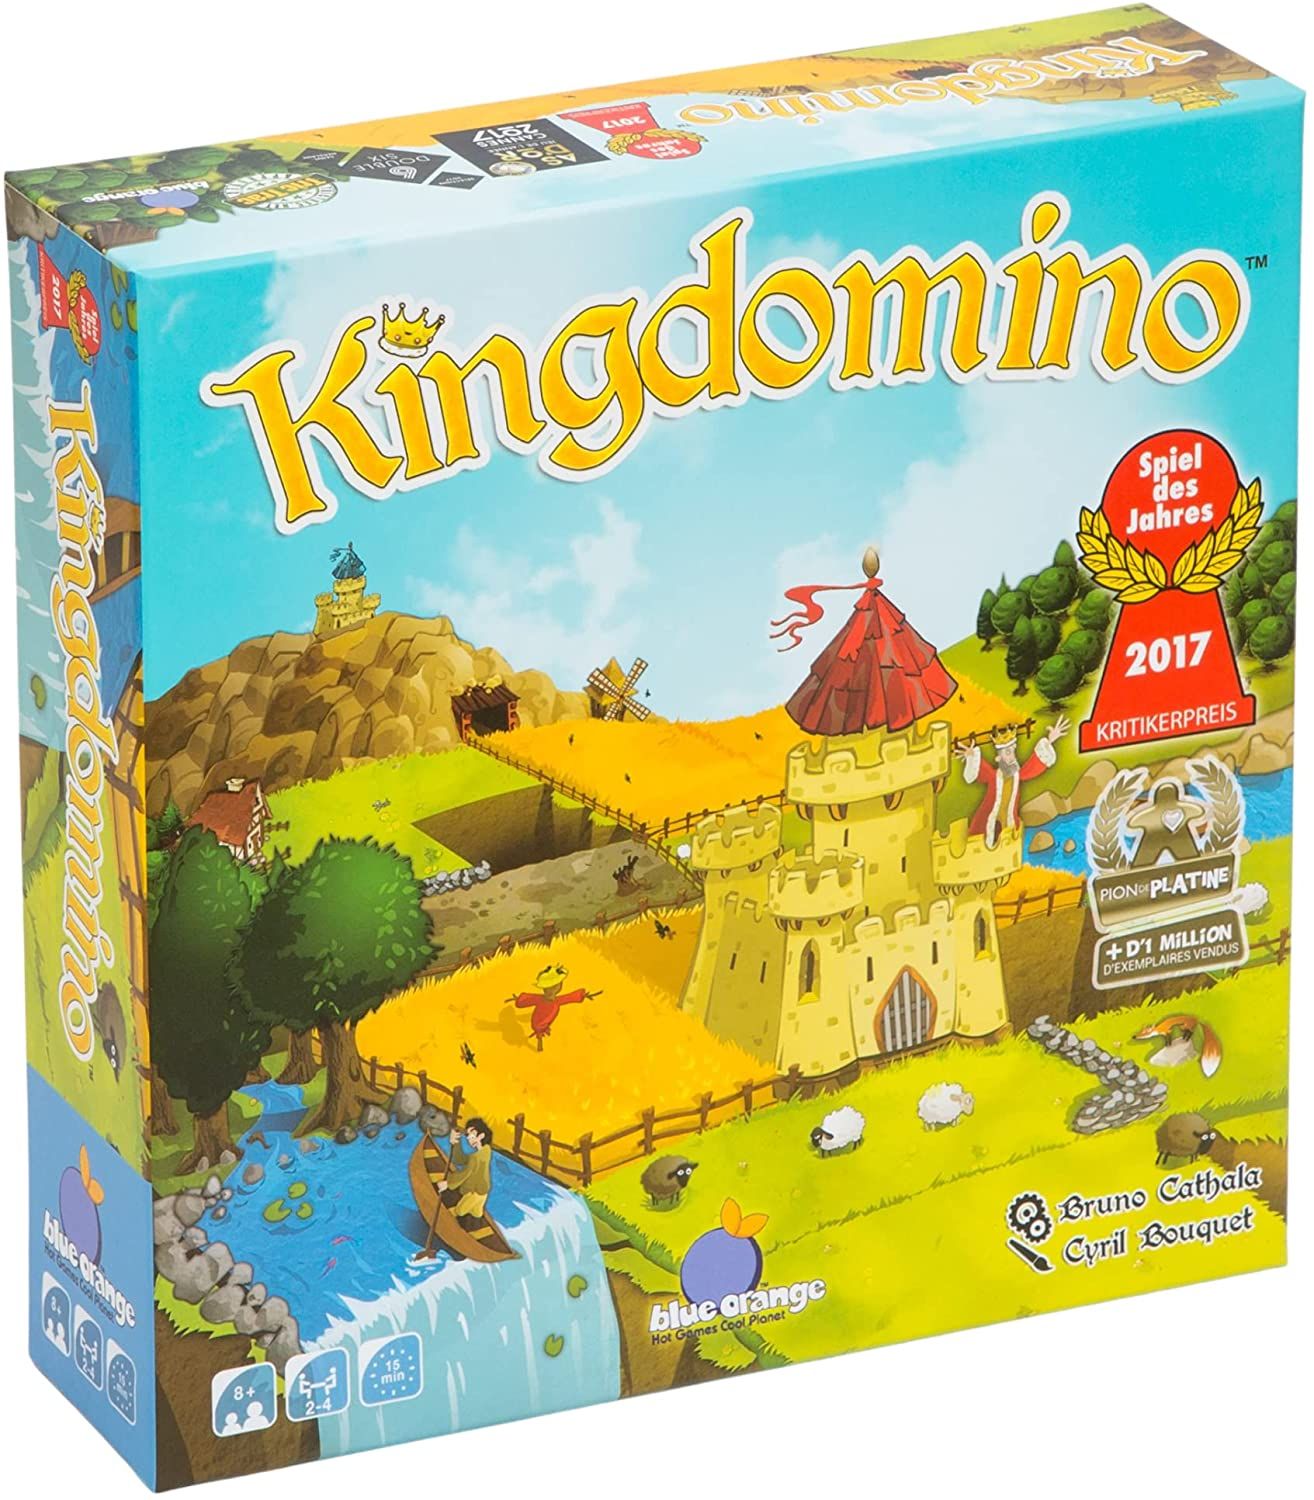 The Kingdomino game box contains a cartoon domino kingdom.